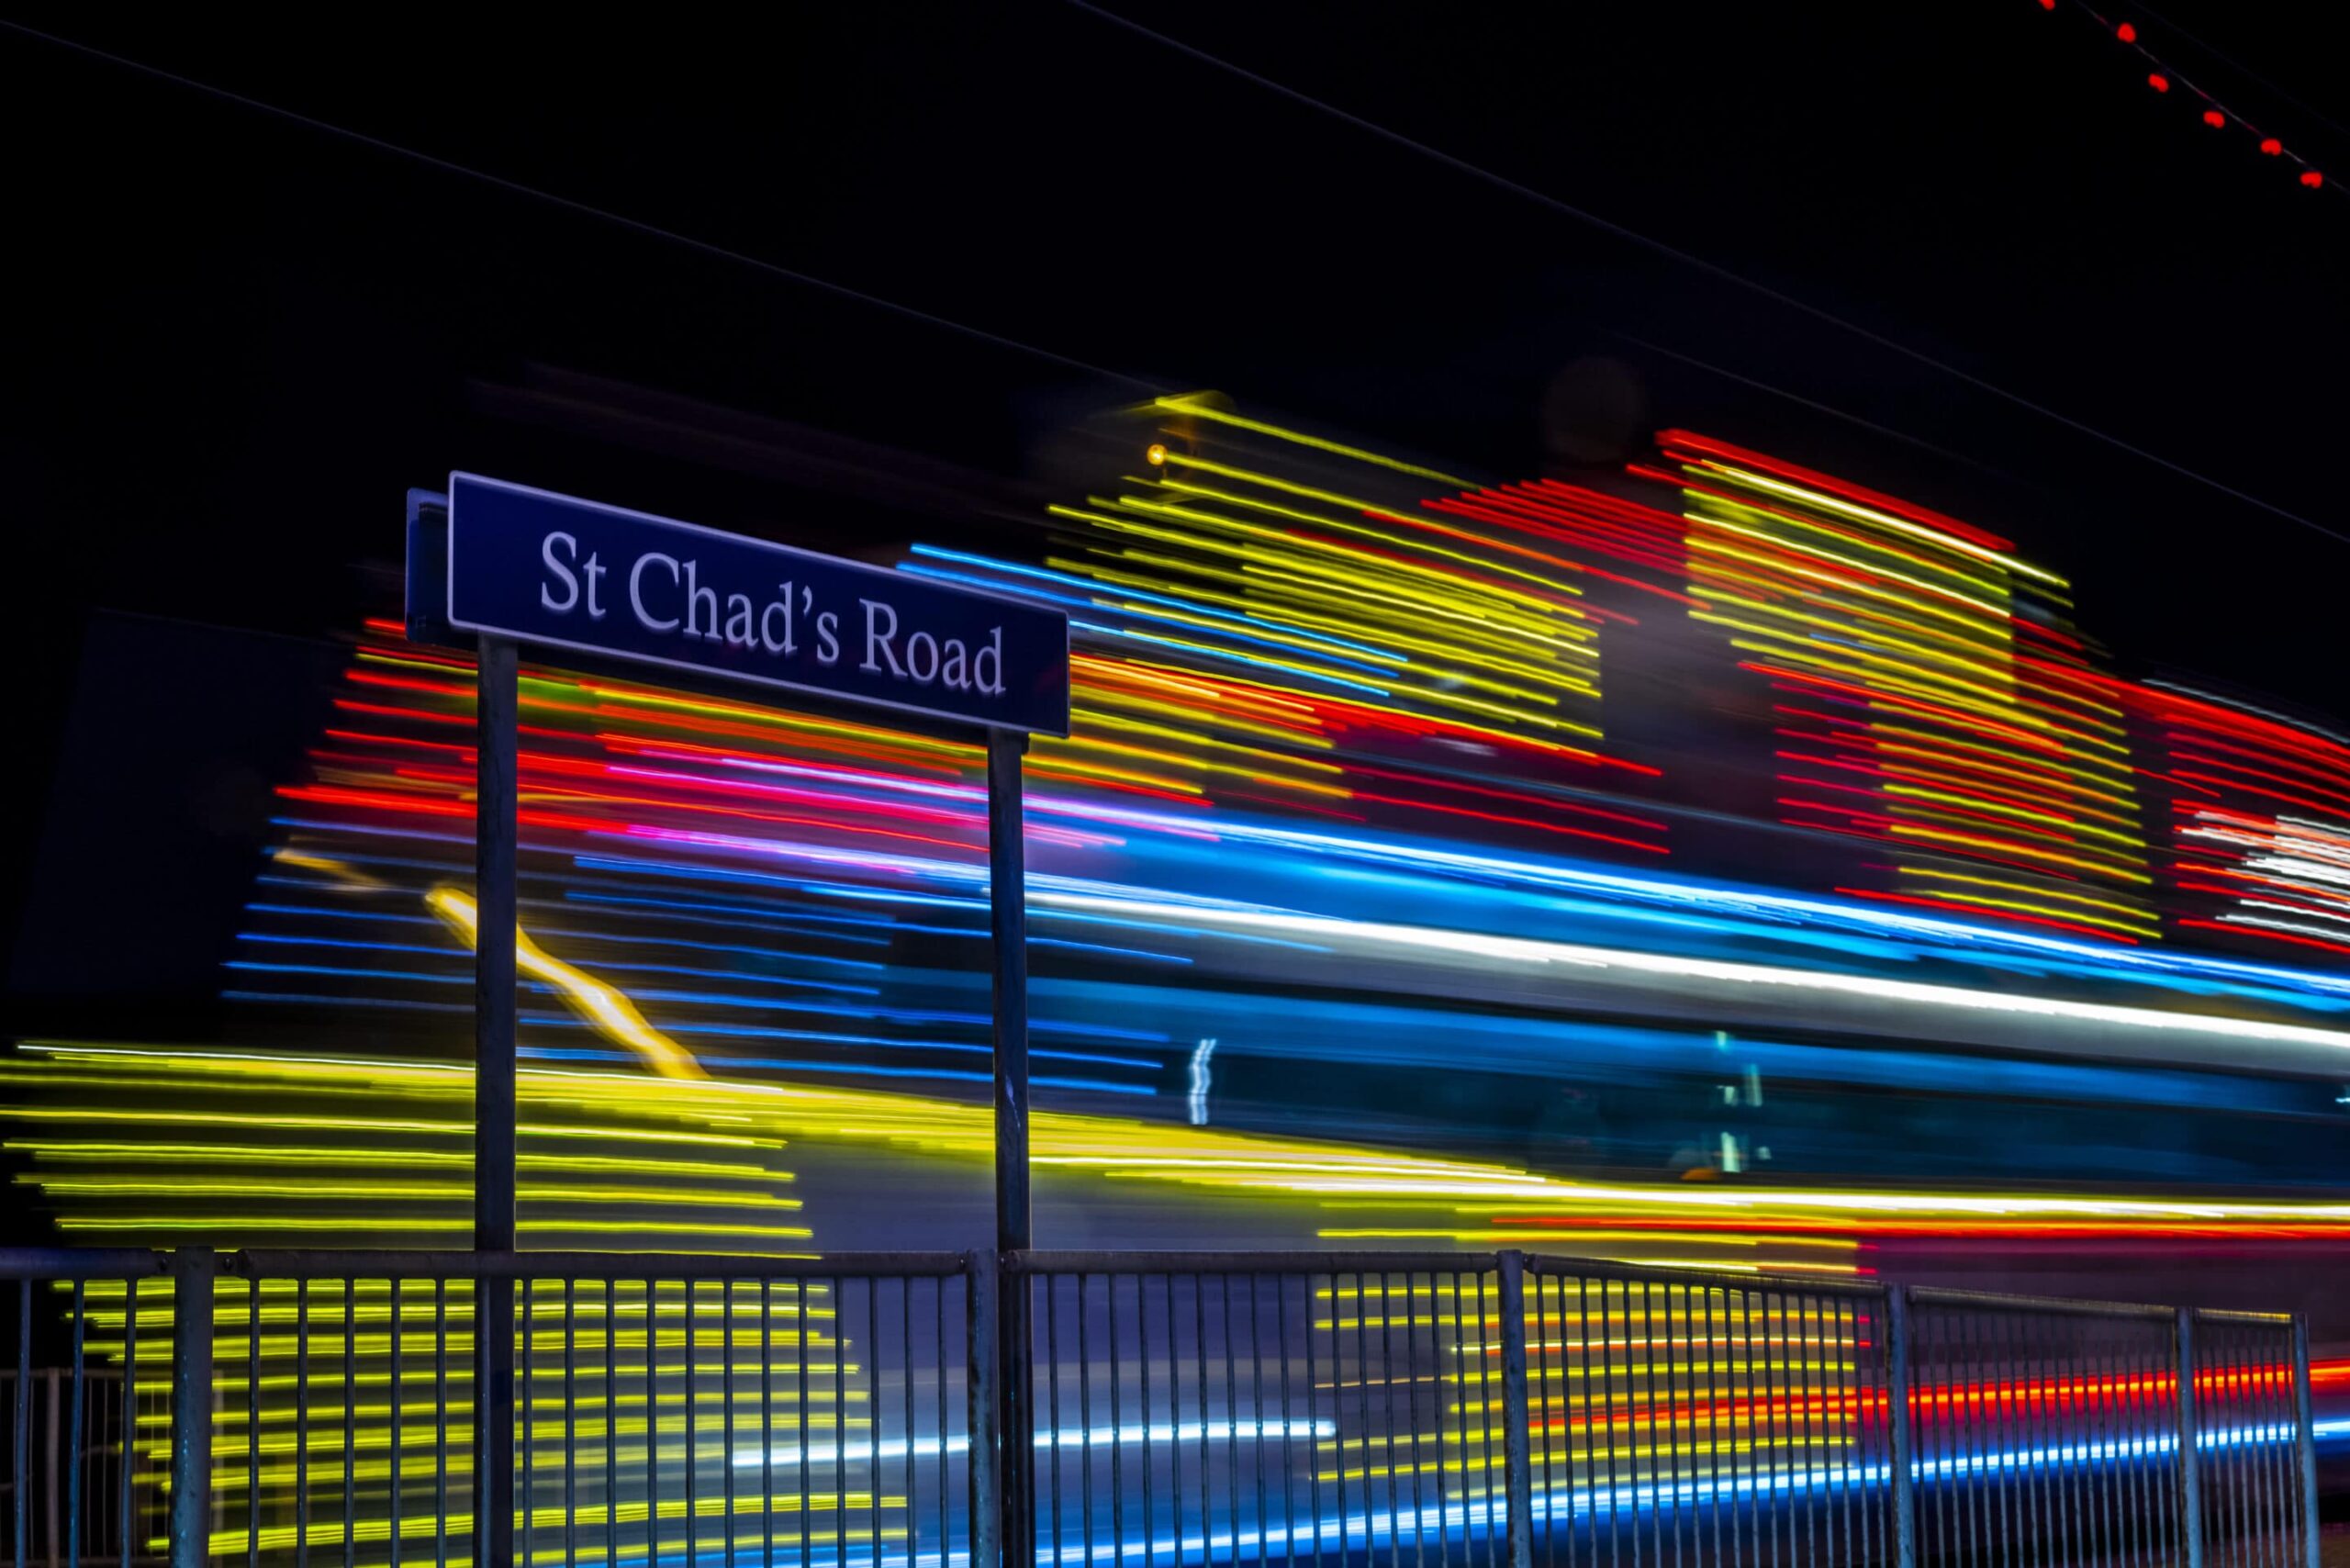 Blackpool Tram, Illuminations, St.Chad’s Road Coastal Landscapes Blackpool Tower